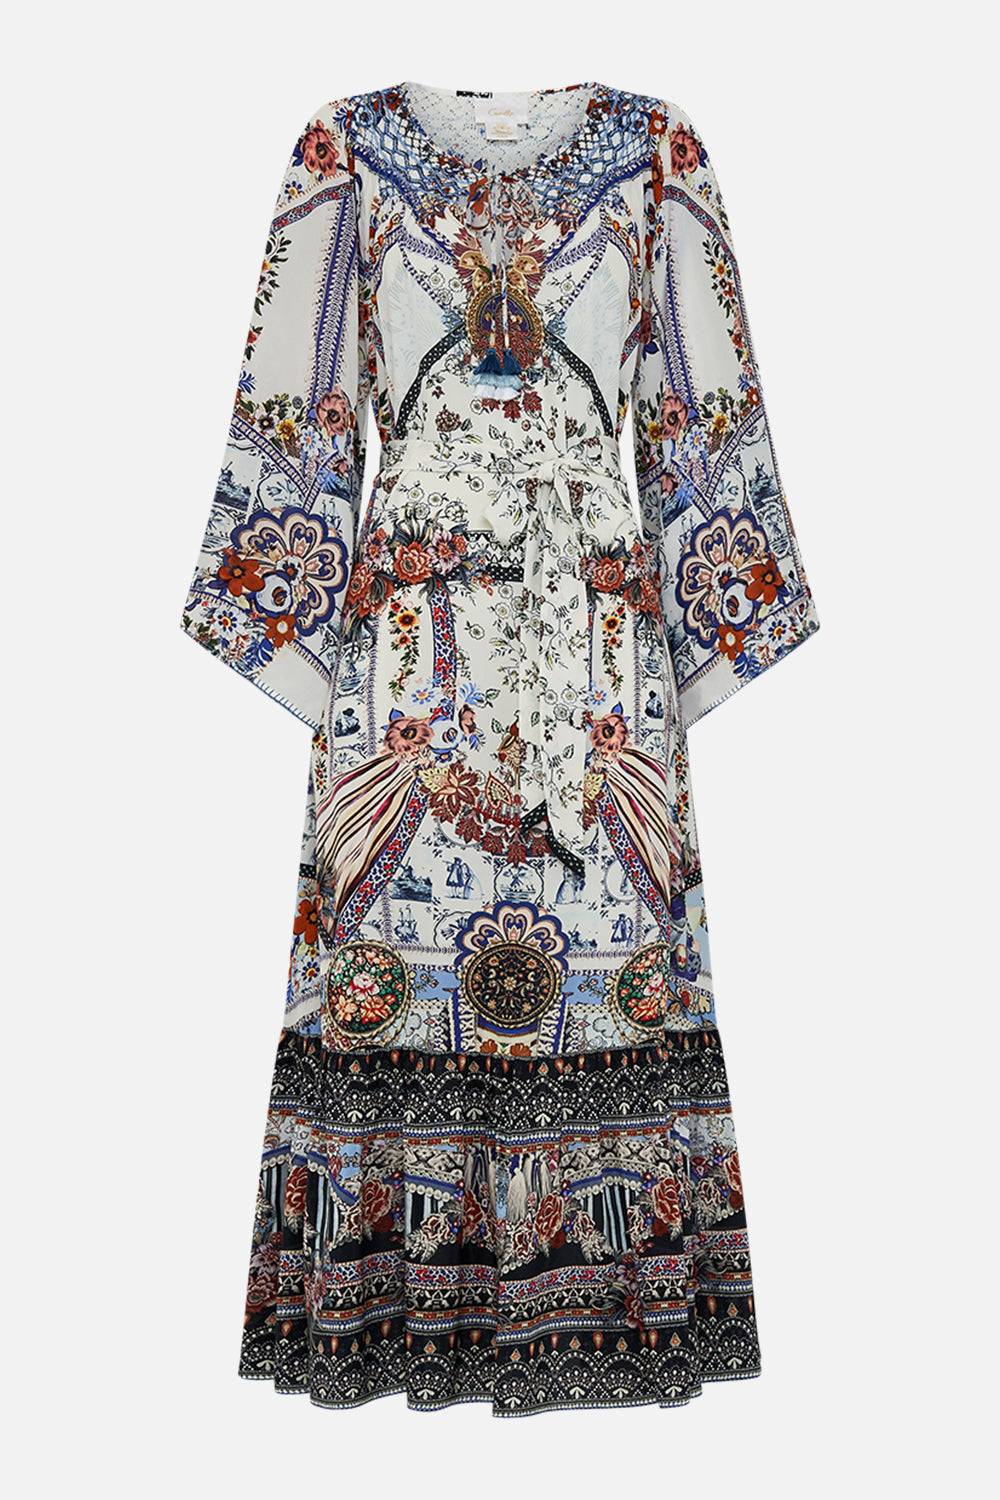 CAMILLA silk dress in My Folk Art Heart print